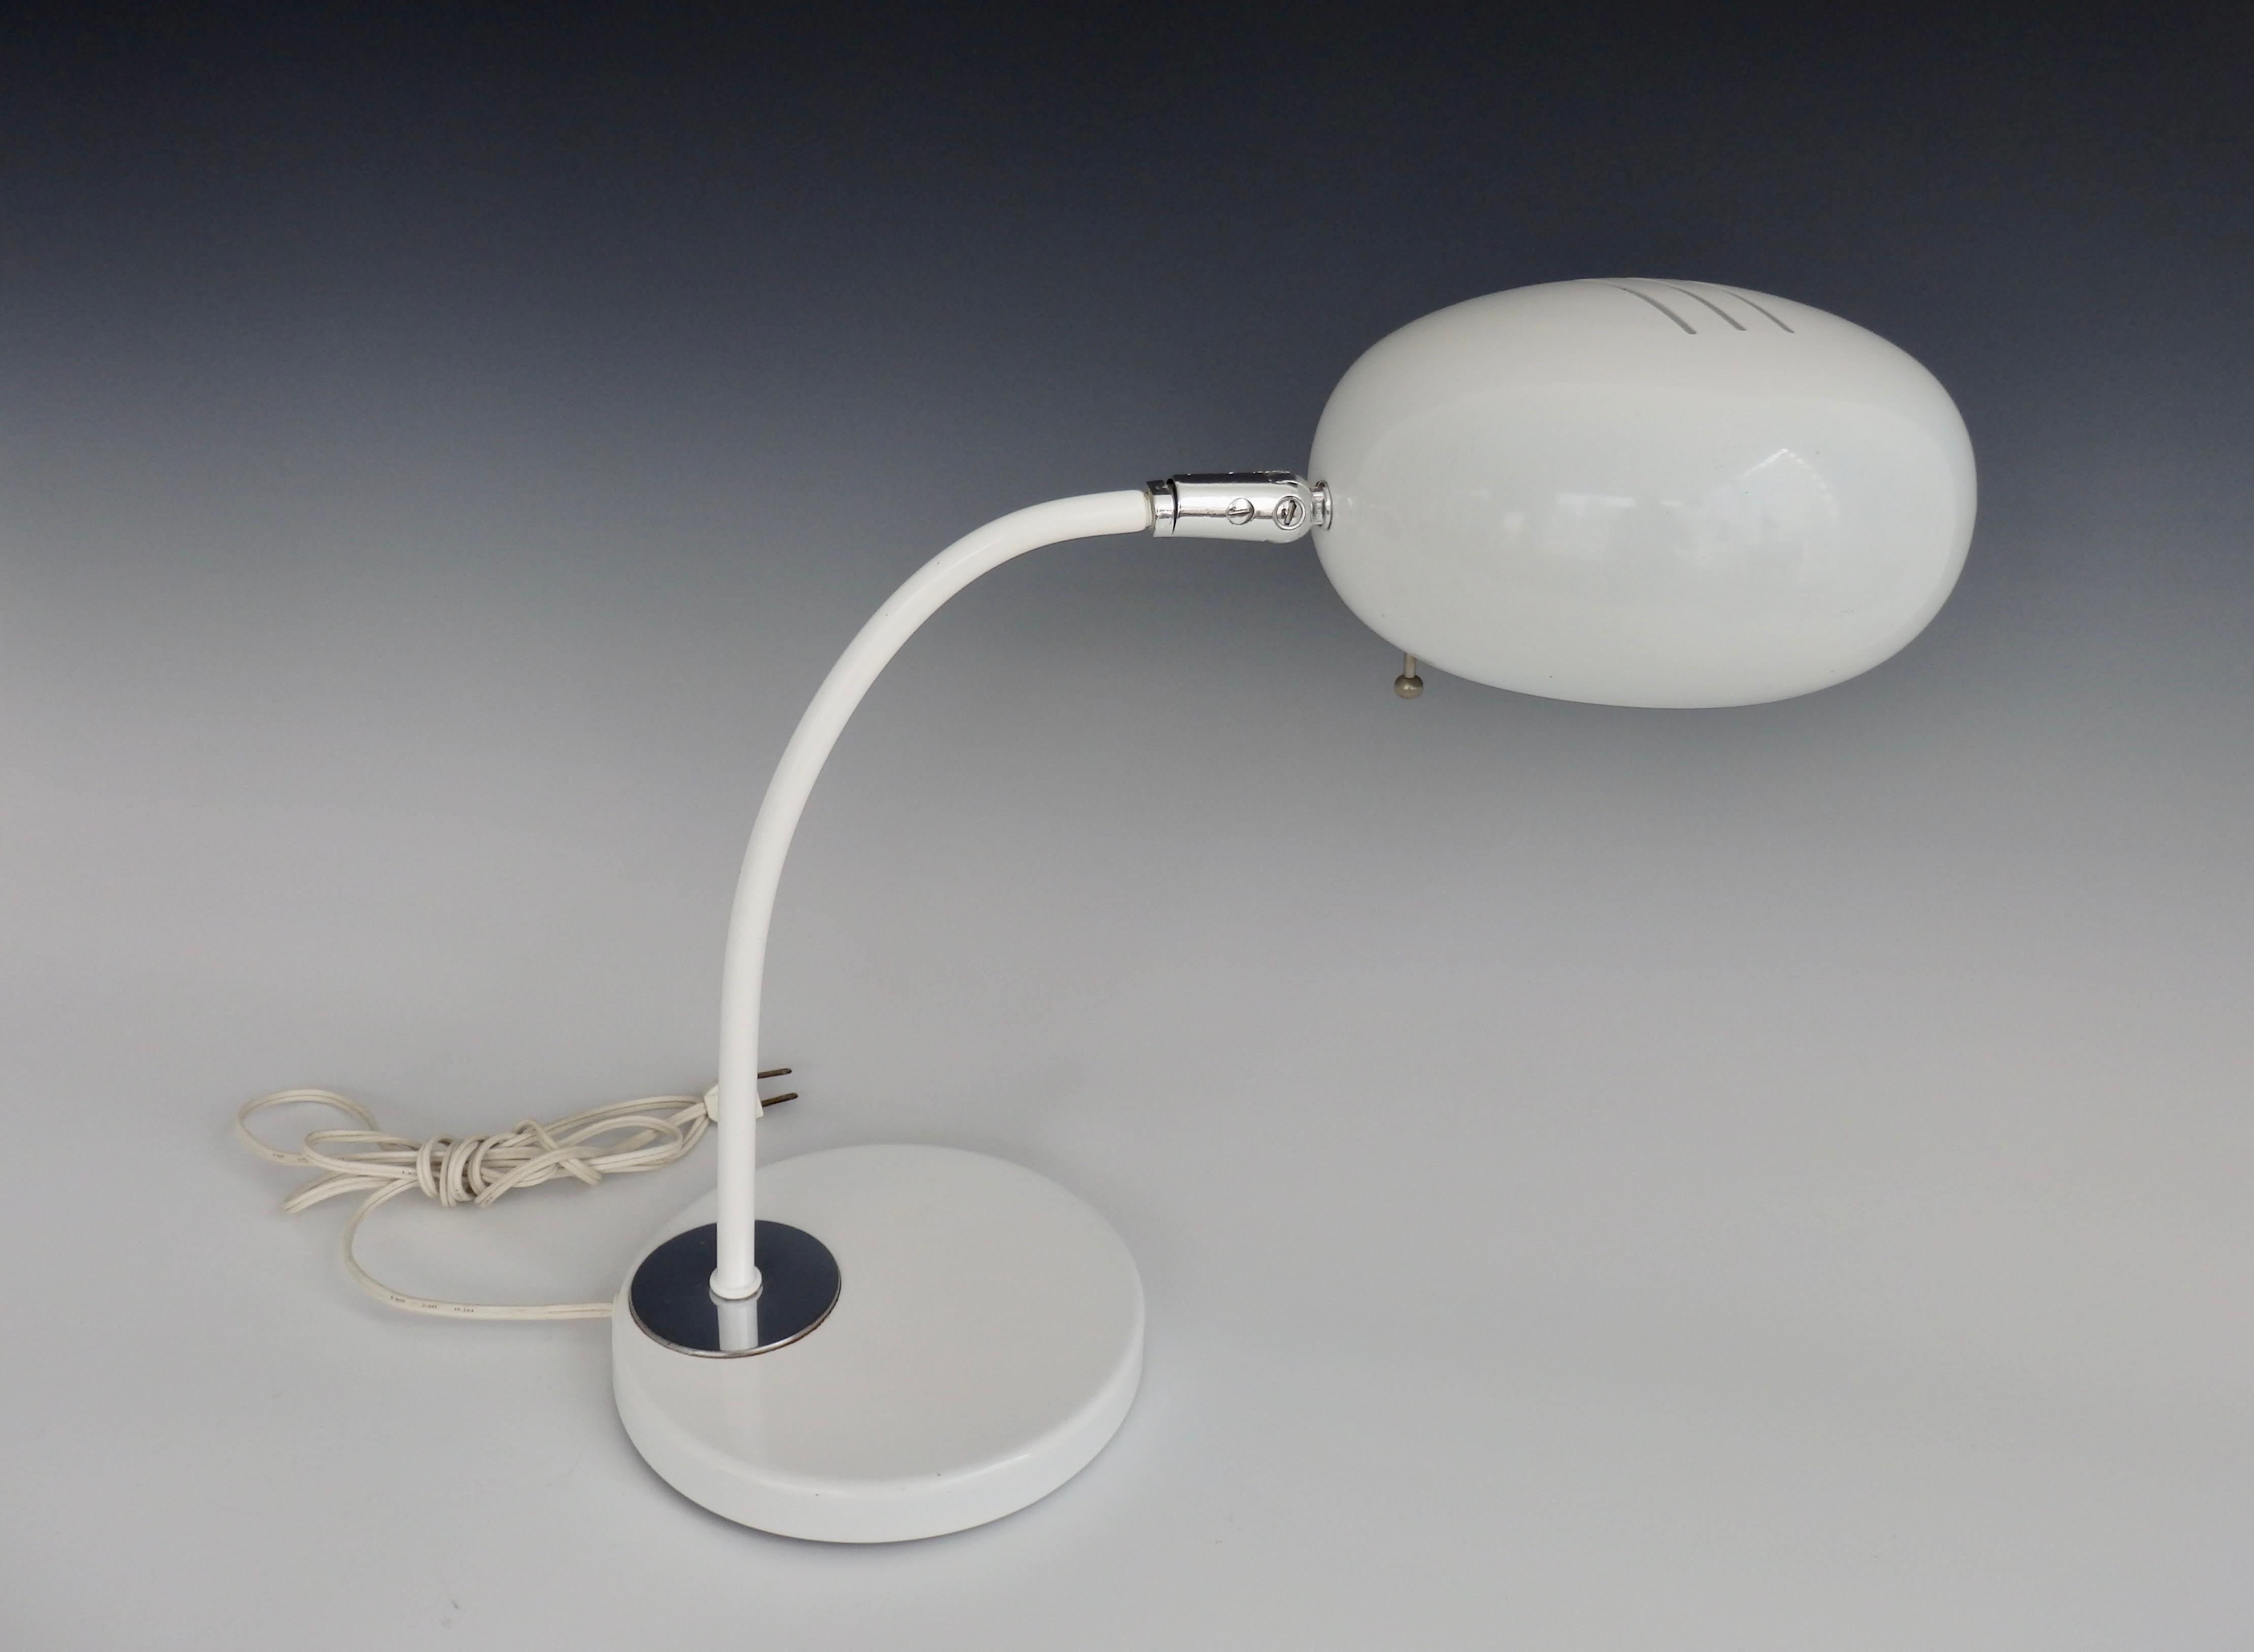 Lampe de bureau ronde blanche brillante de style Mid-Century Modern.
La base fait 7,24